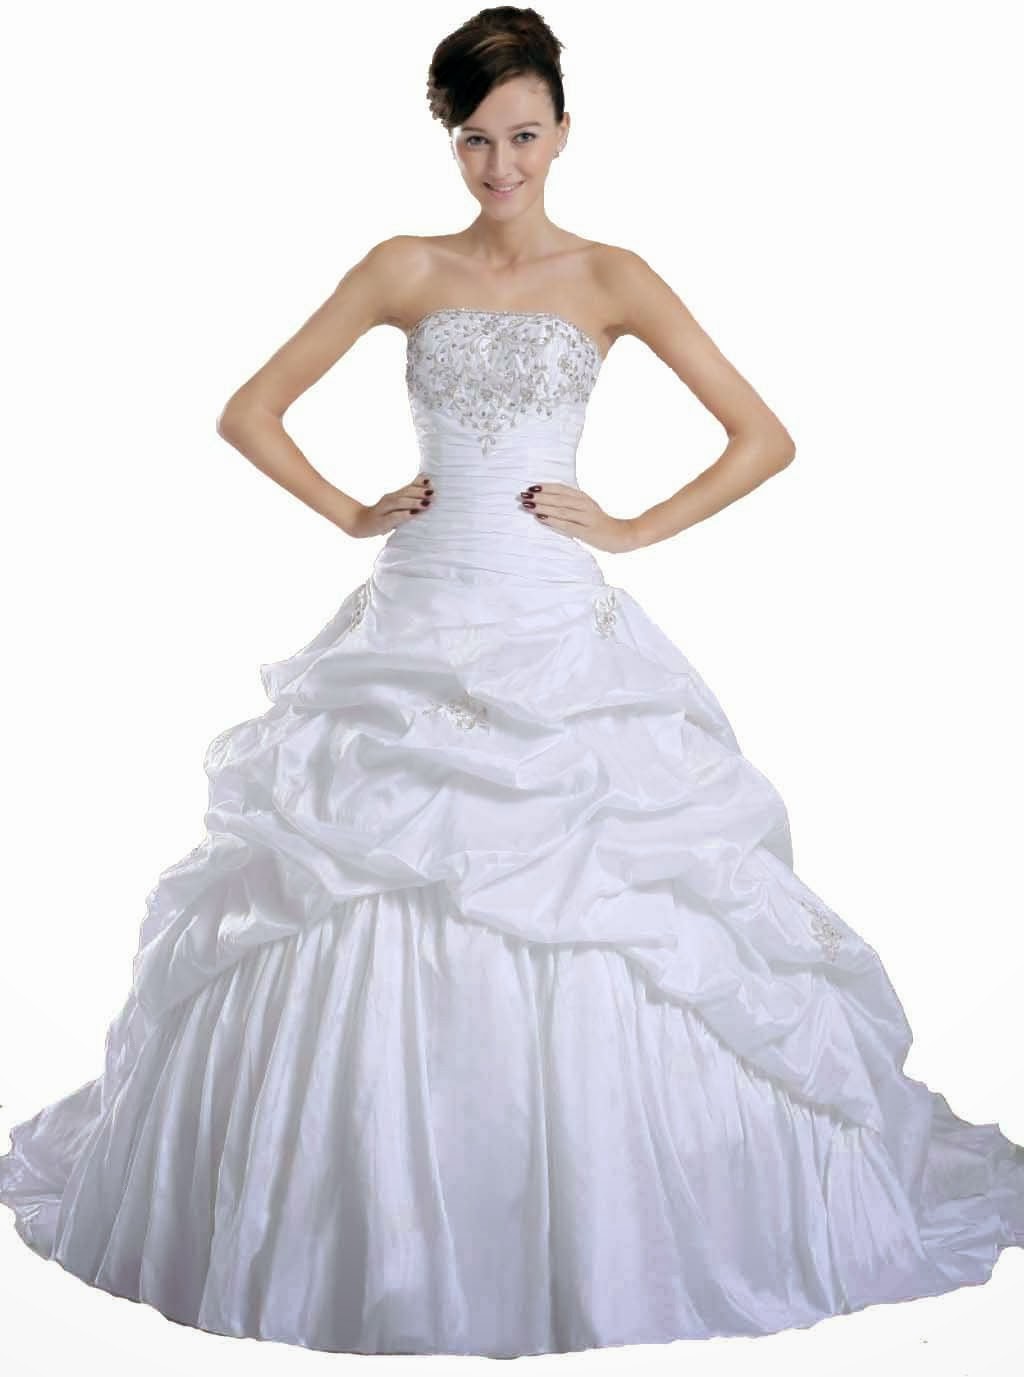 Inexpensive wedding dress